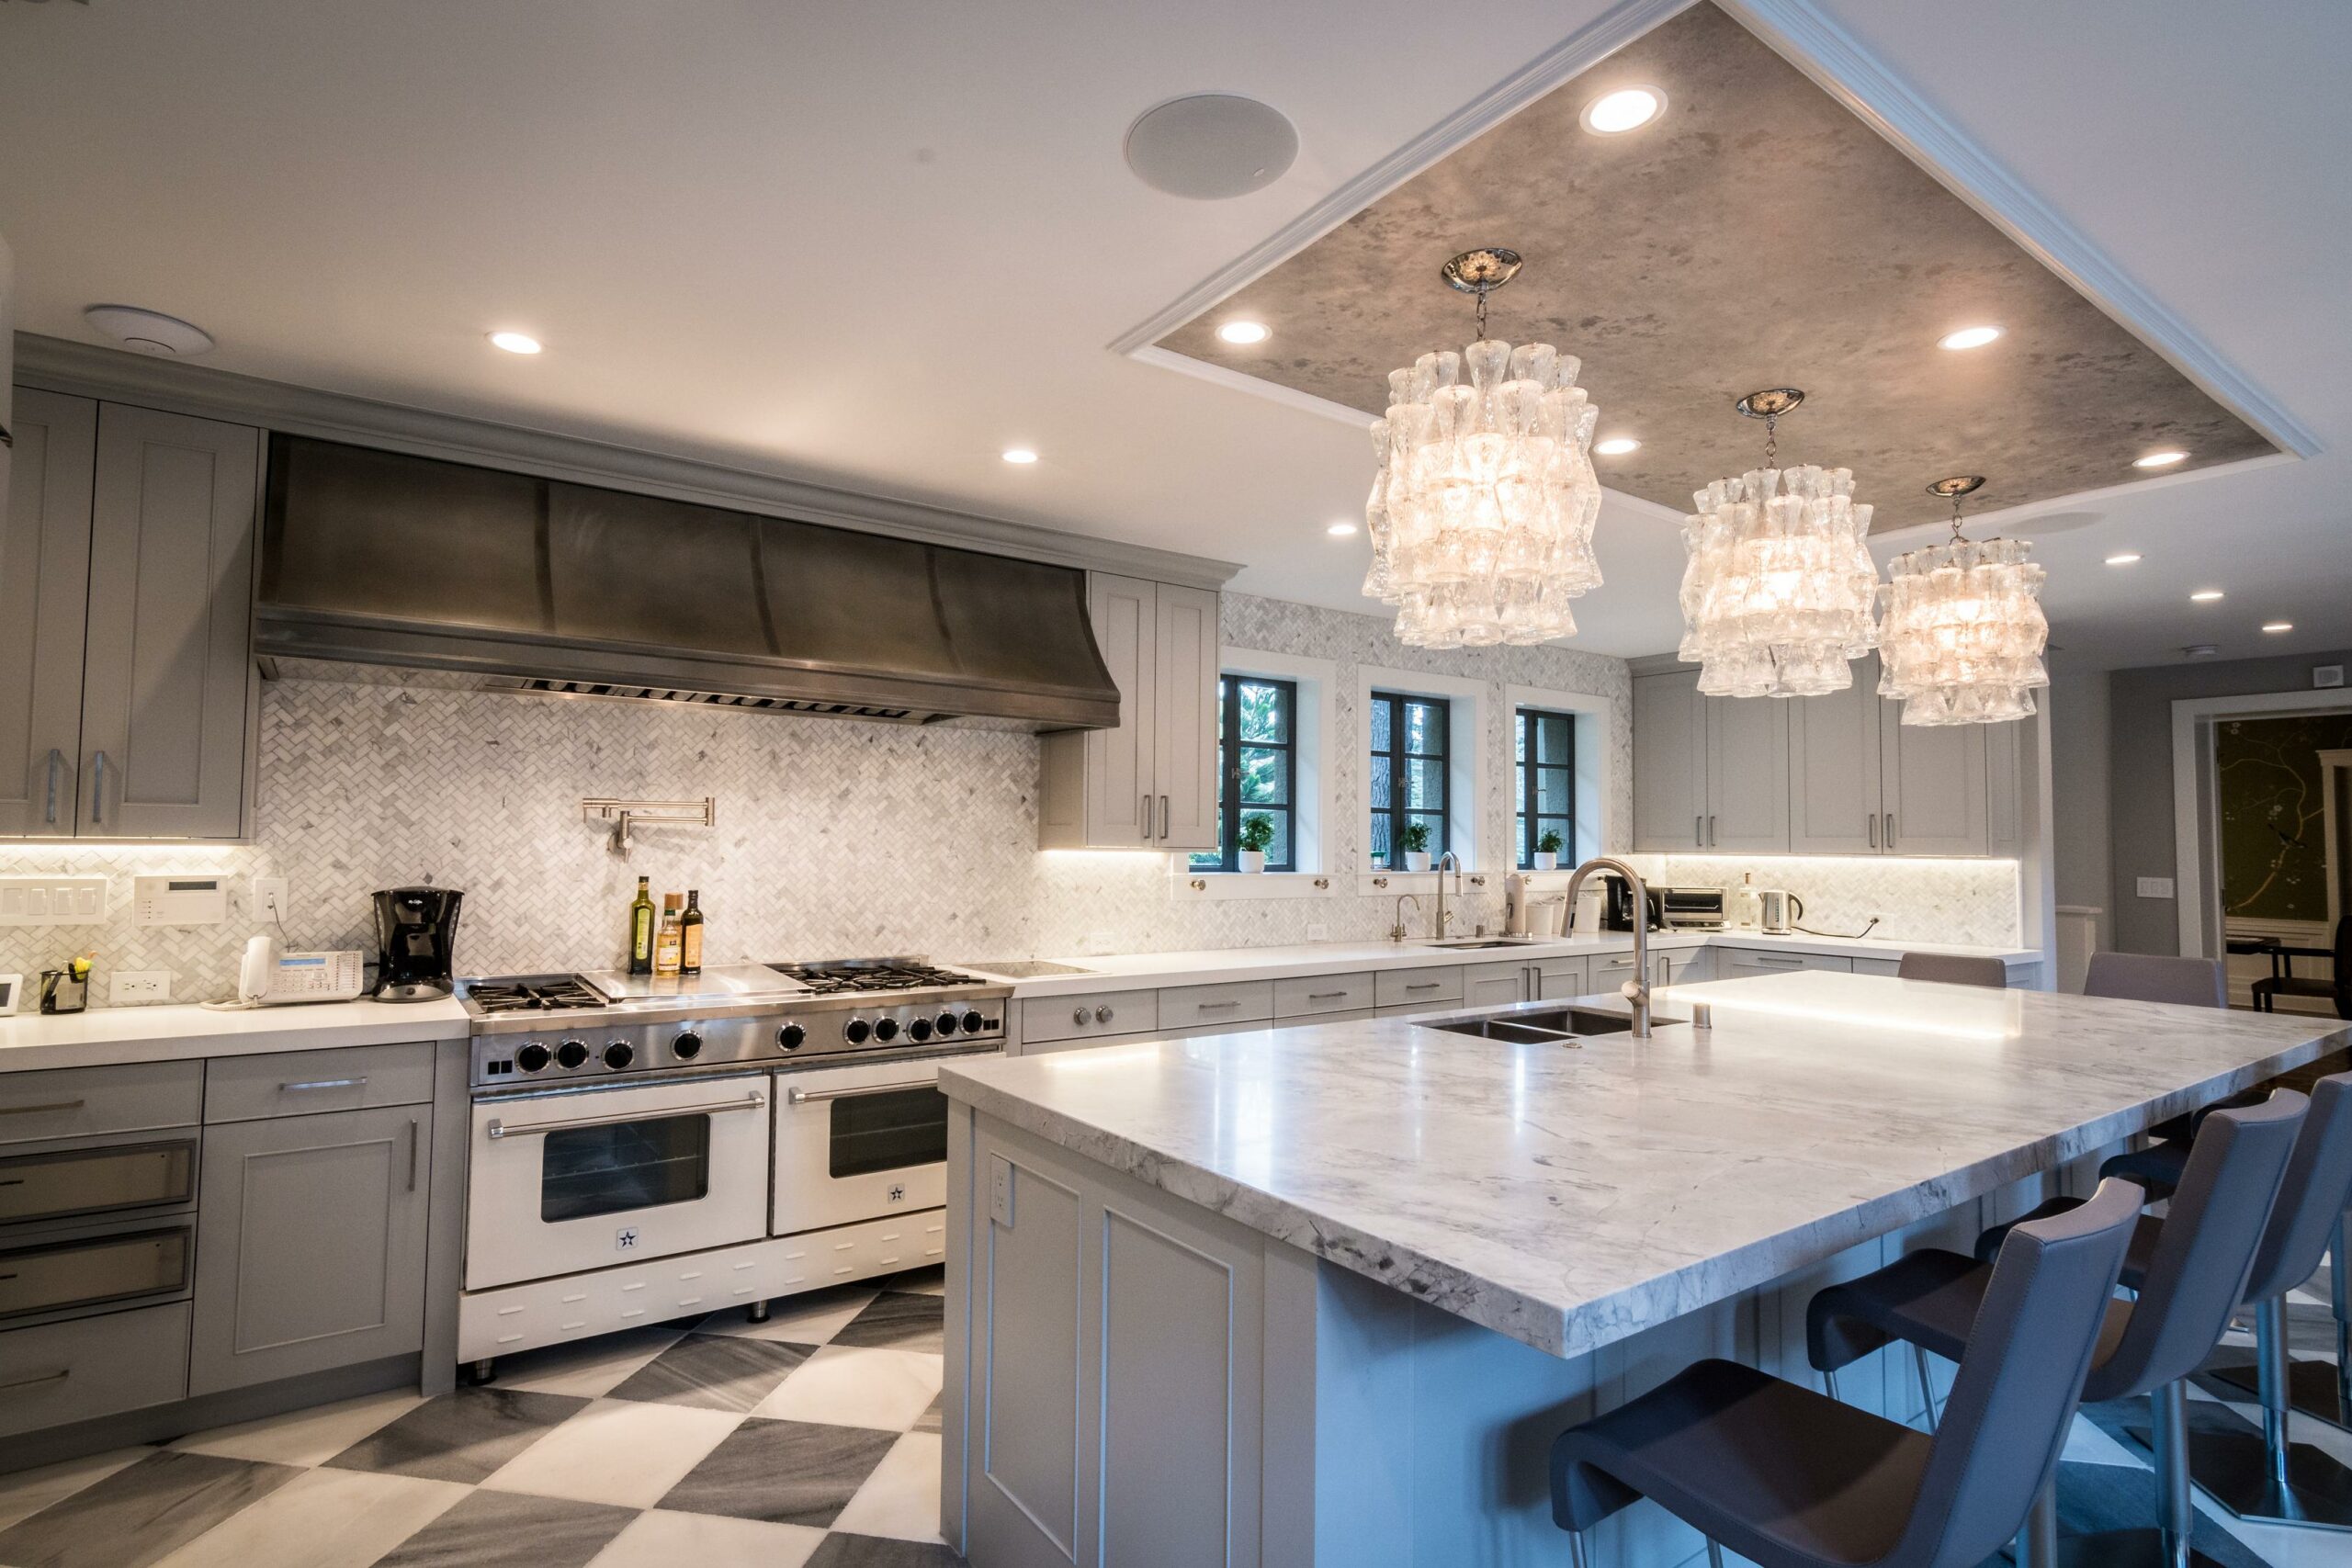 Modern kitchen interior with island and elegant light fixtures